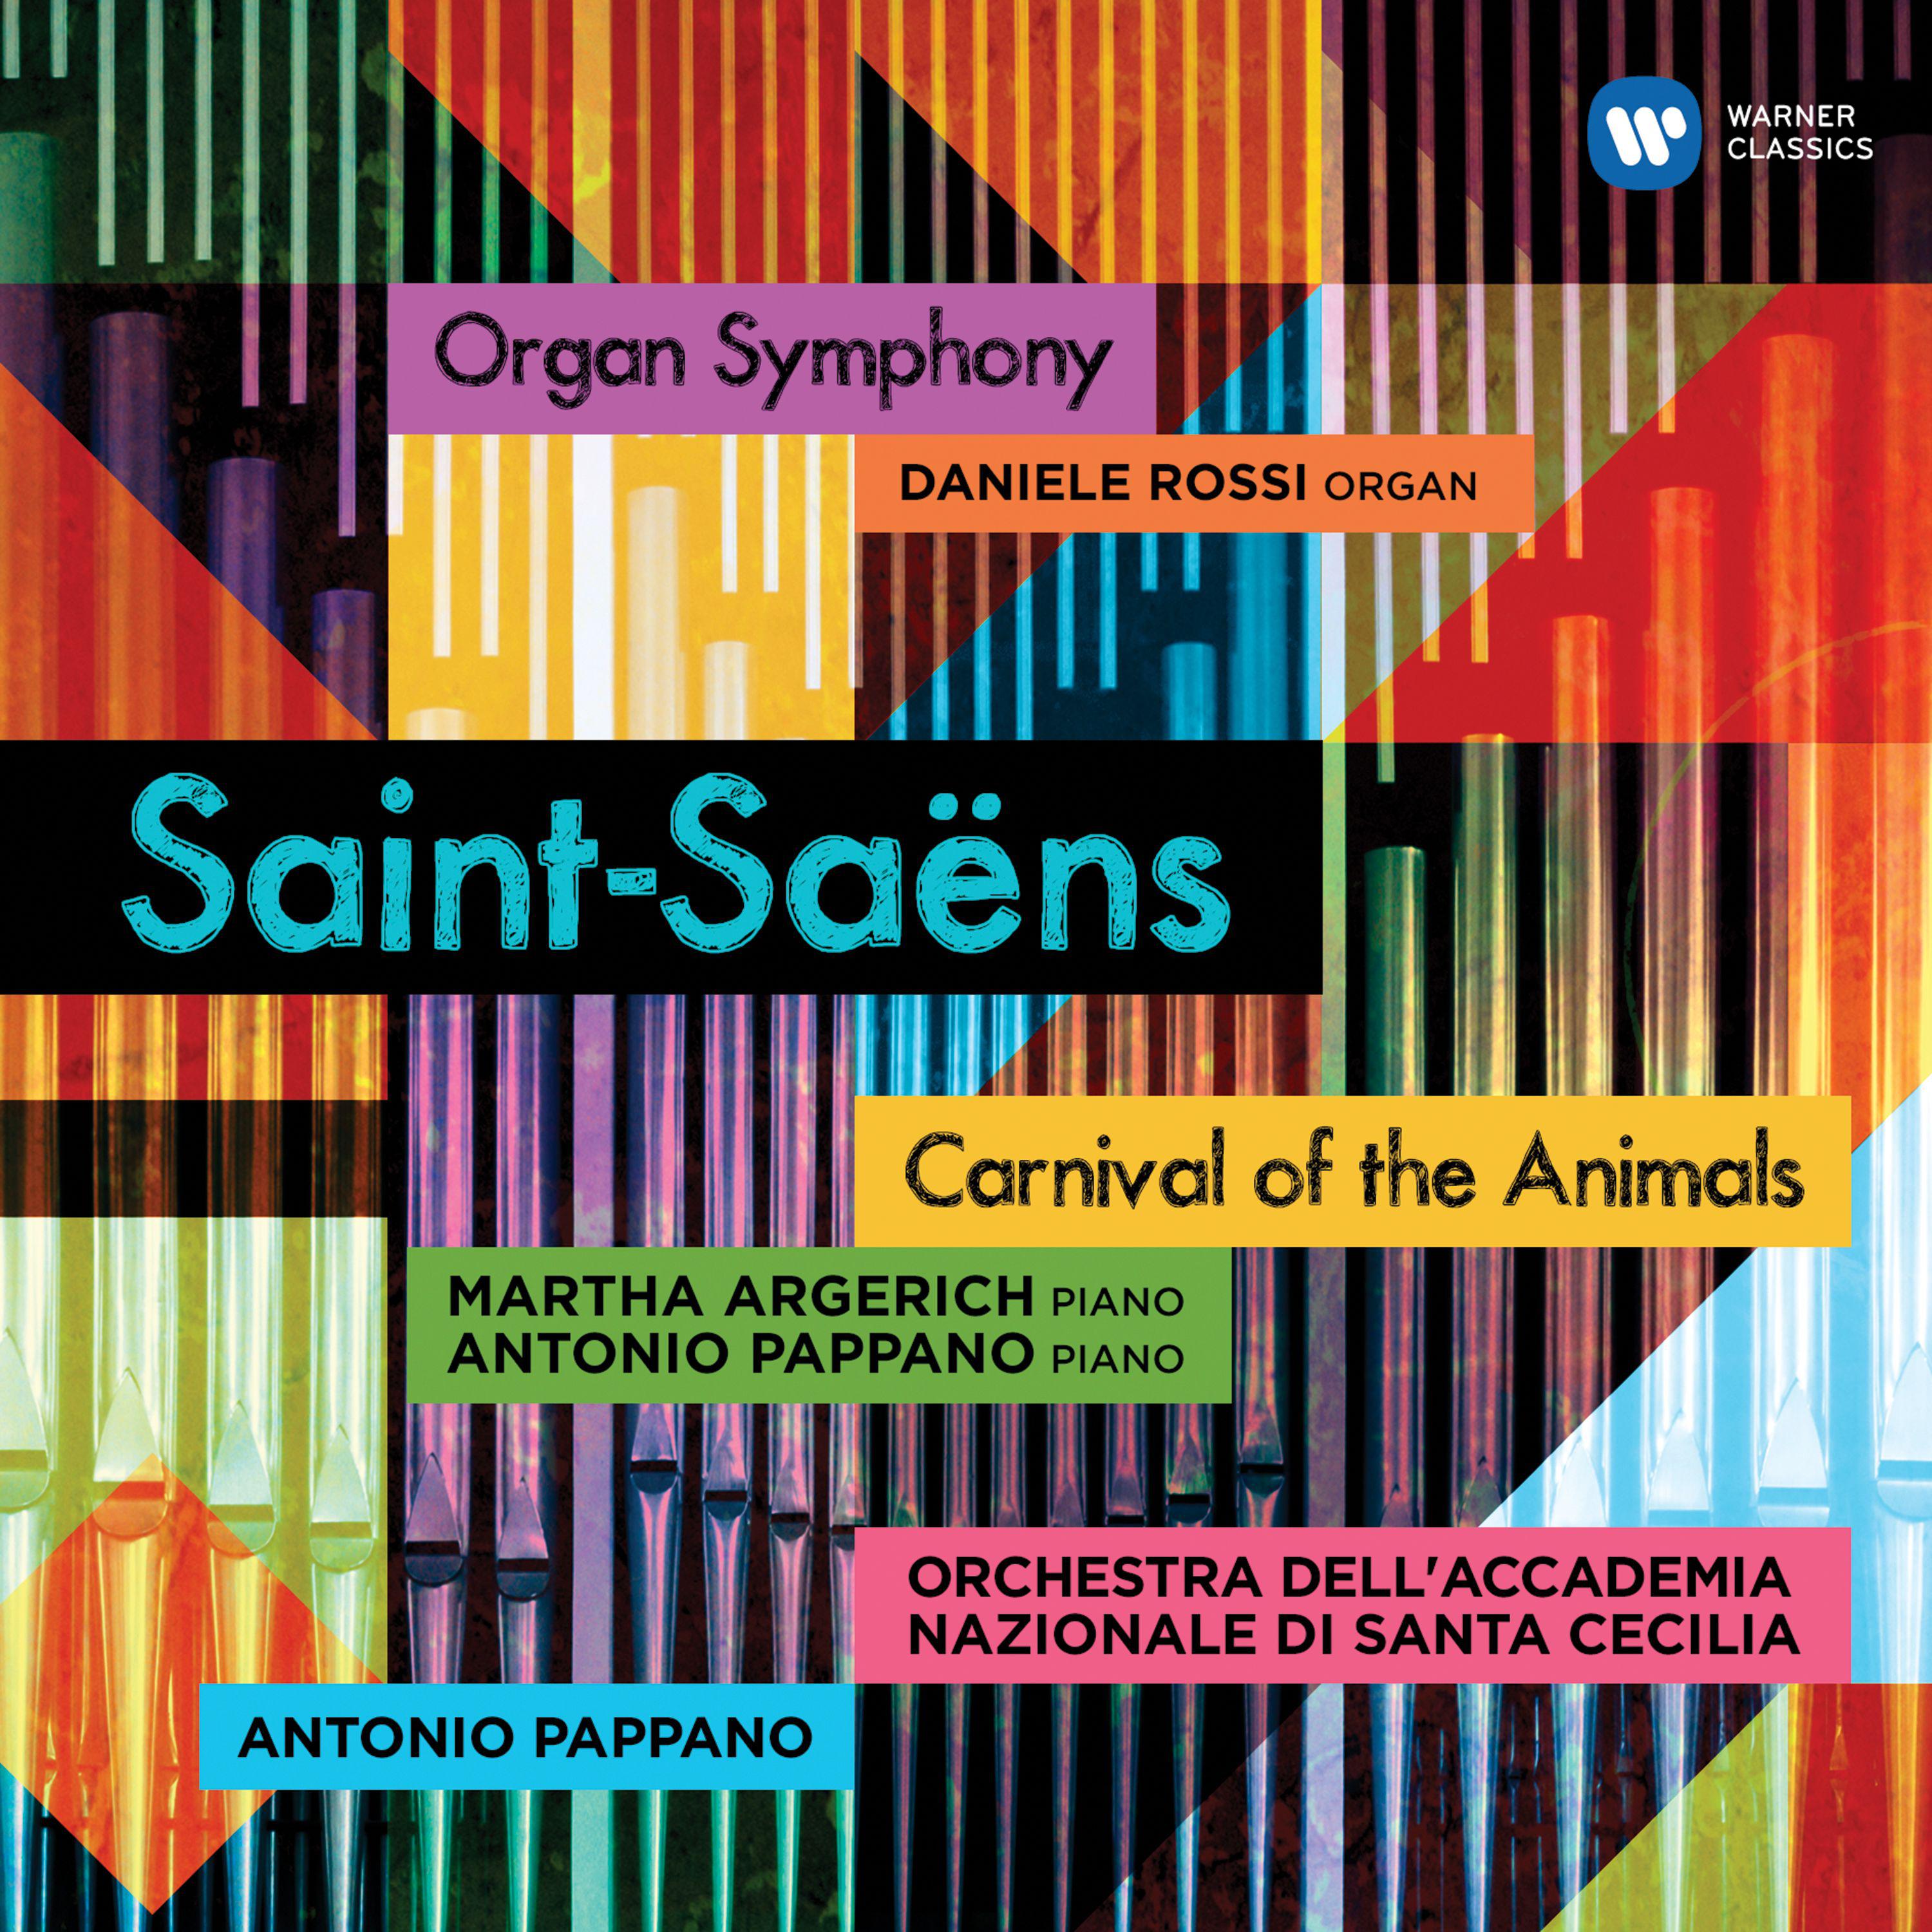 SaintSa ns: Carnival of the Animals  Symphony No. 3, " Organ"